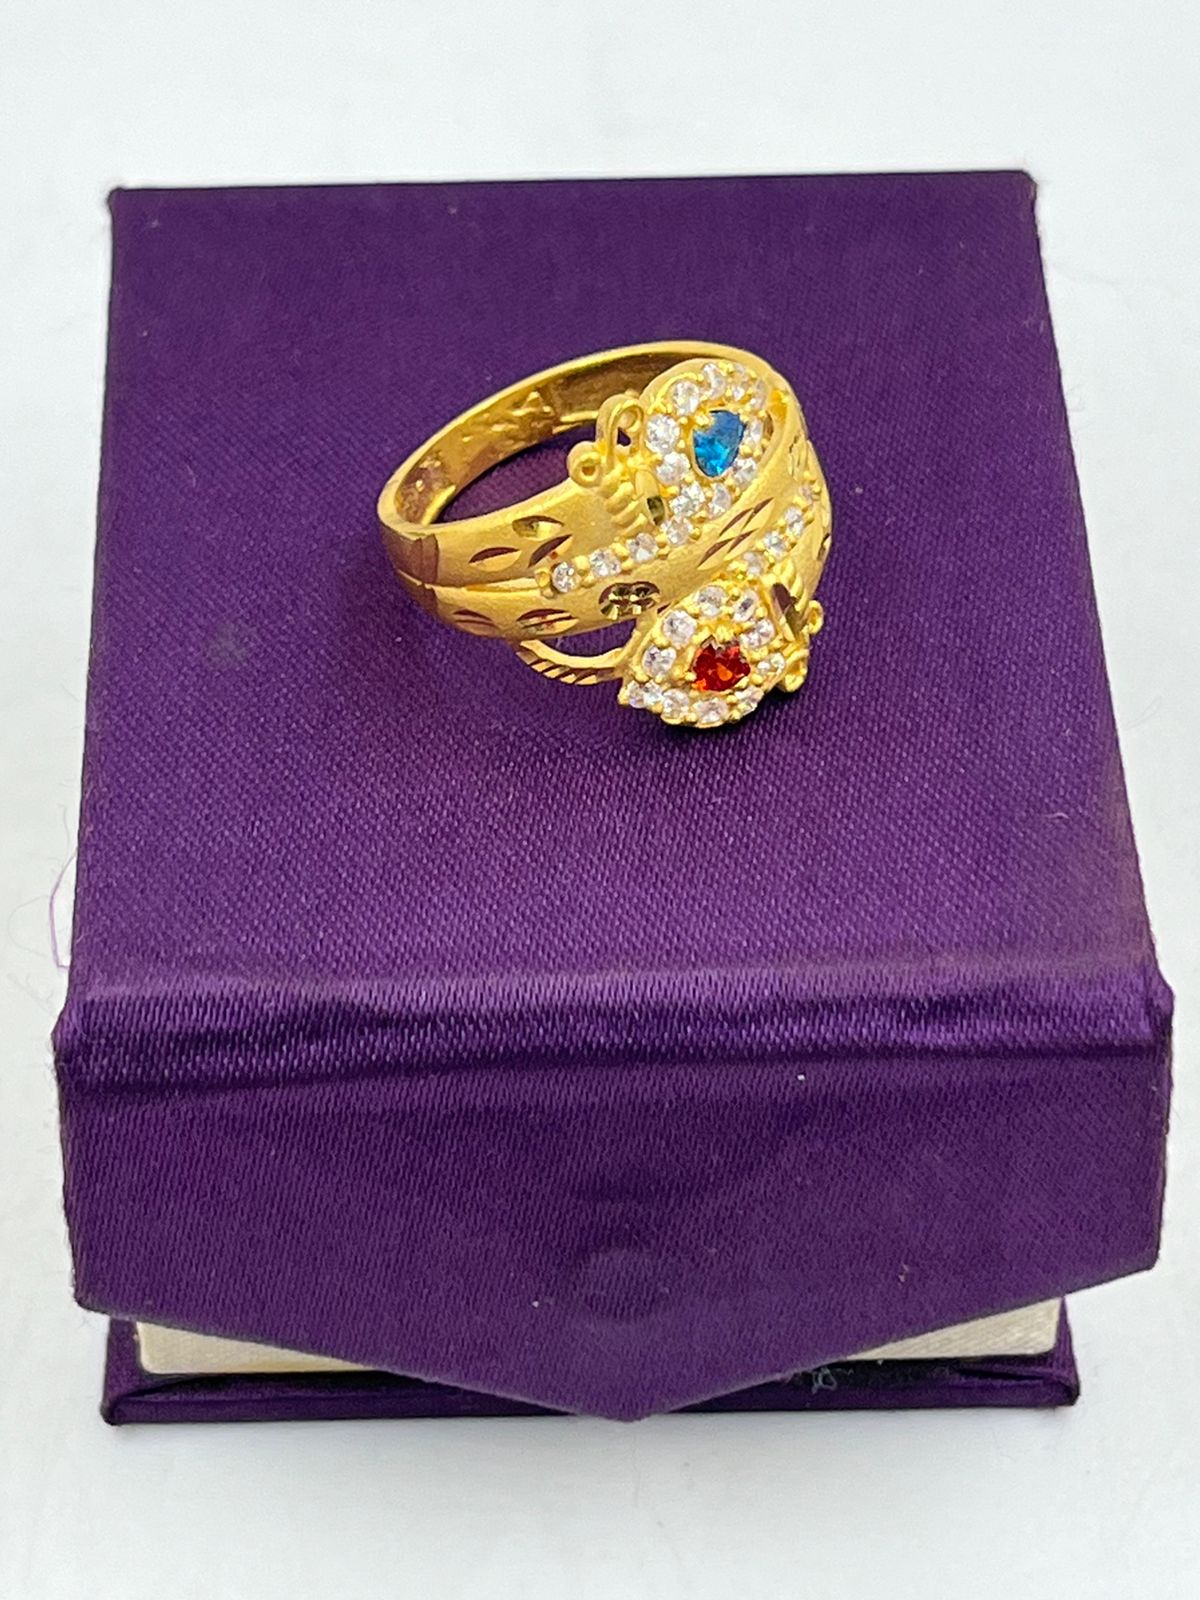 1 Gram Suisse Gold Bar Lady Fortuna 14K Real Yellow Gold Ring Greek Key  Design | eBay